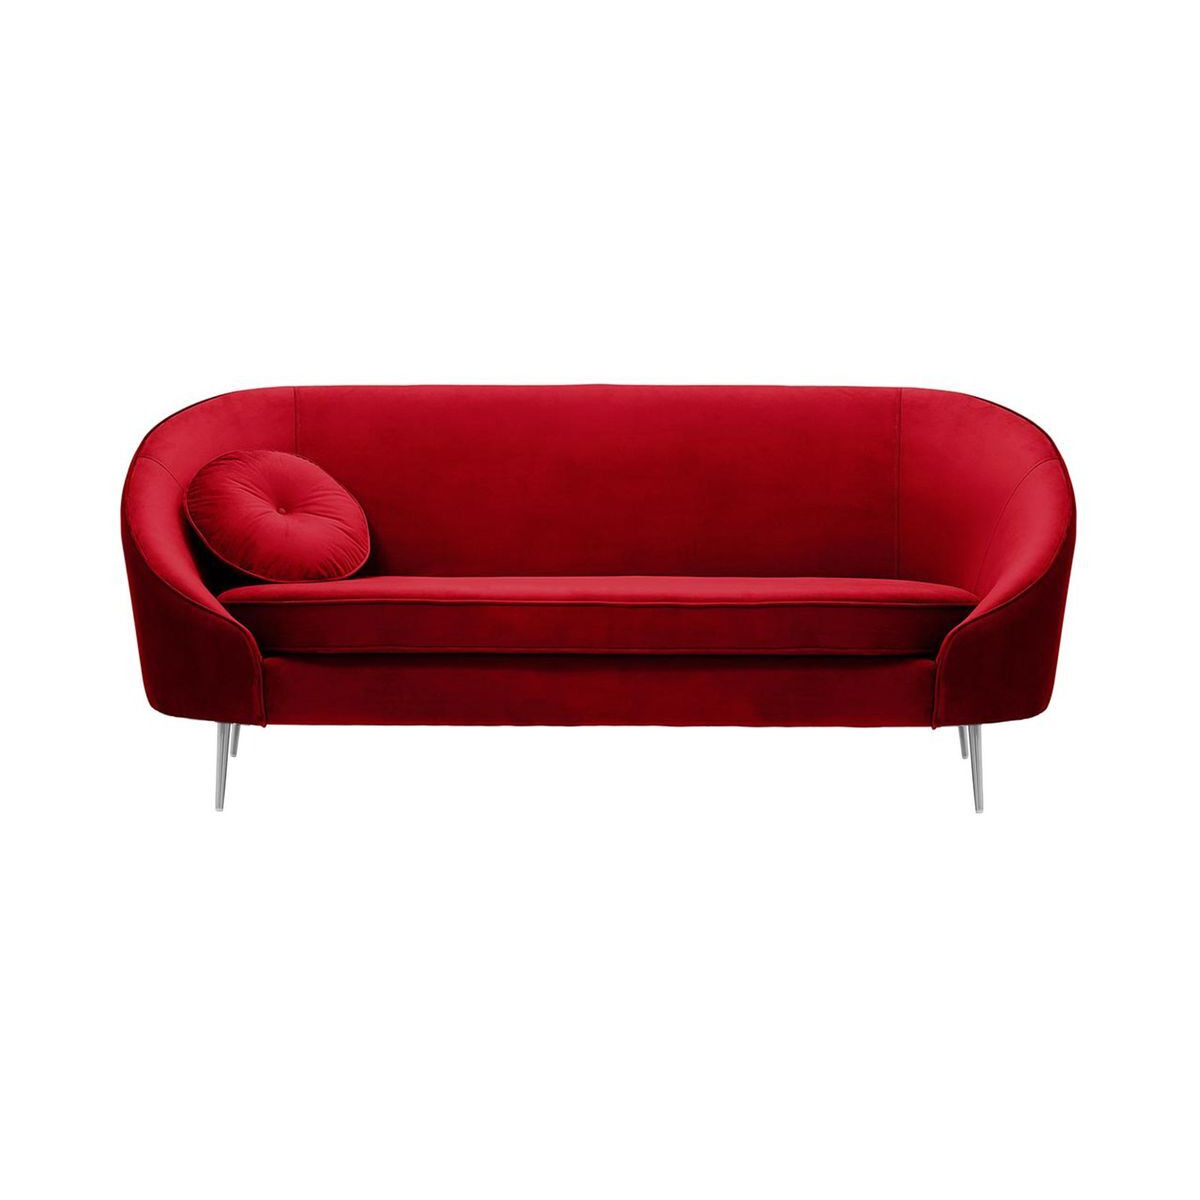 Kooper 3 Seater Sofa, dark red, Leg colour: chrome metal - image 1